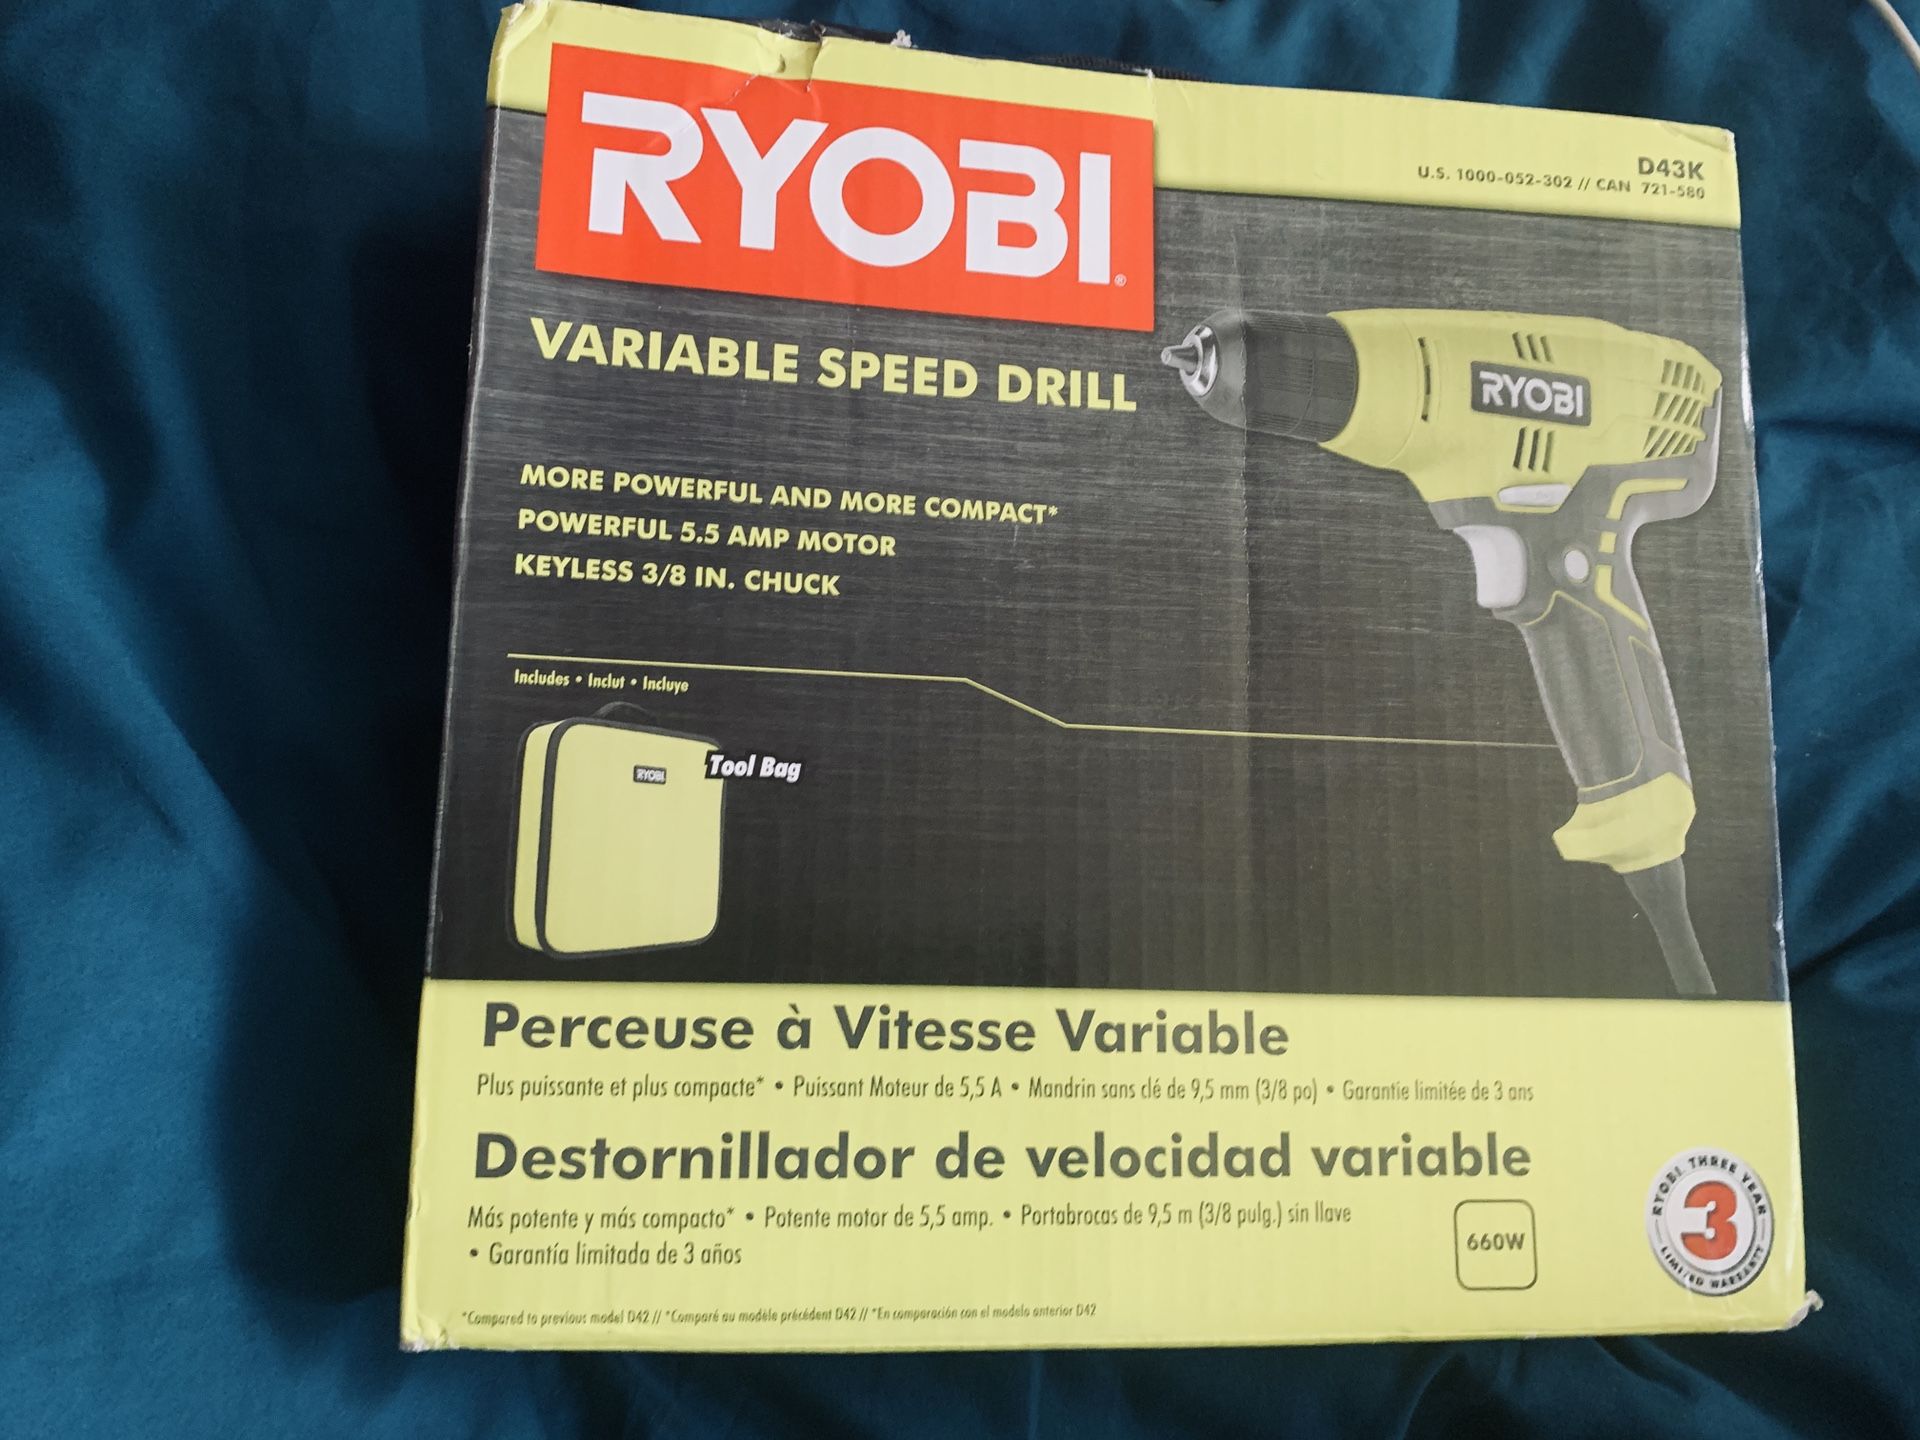 Ryobi variable speed drill and tool bag